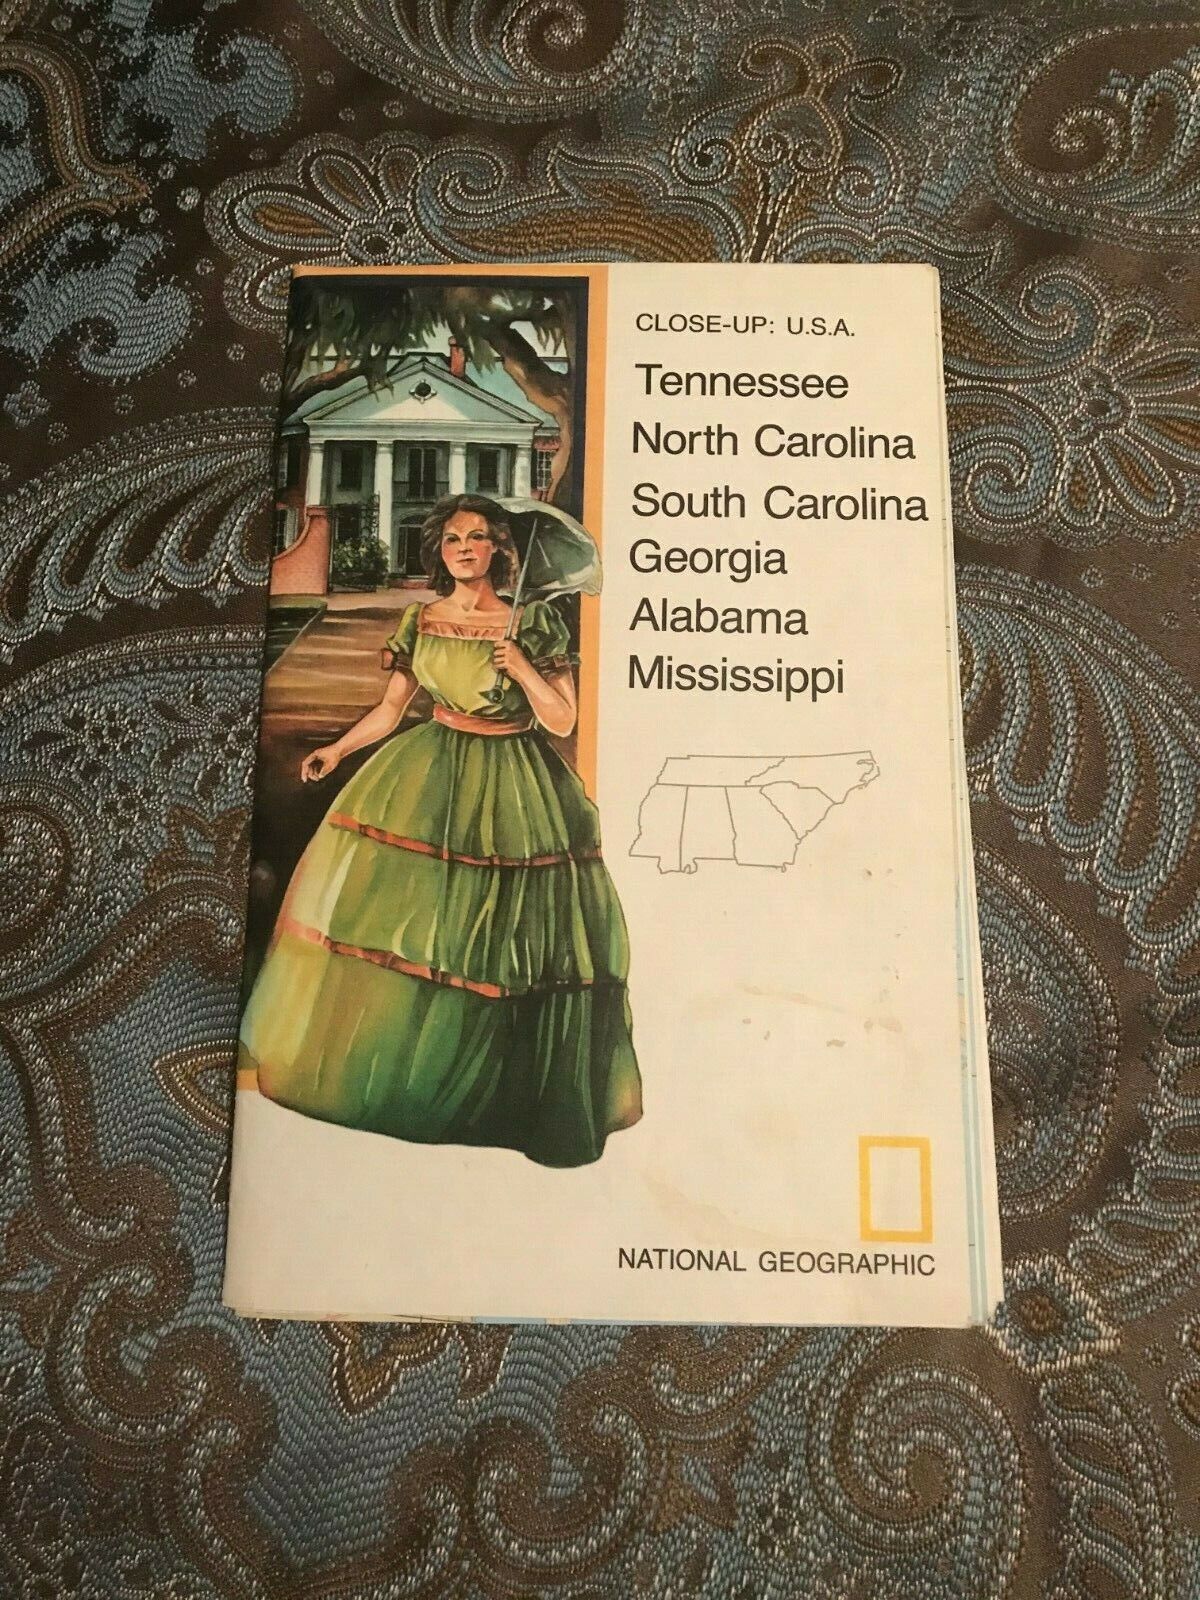 Natl Geographic 1975 Tenn, N & S Carolina Georgia Alabama Mississippi Genealogy